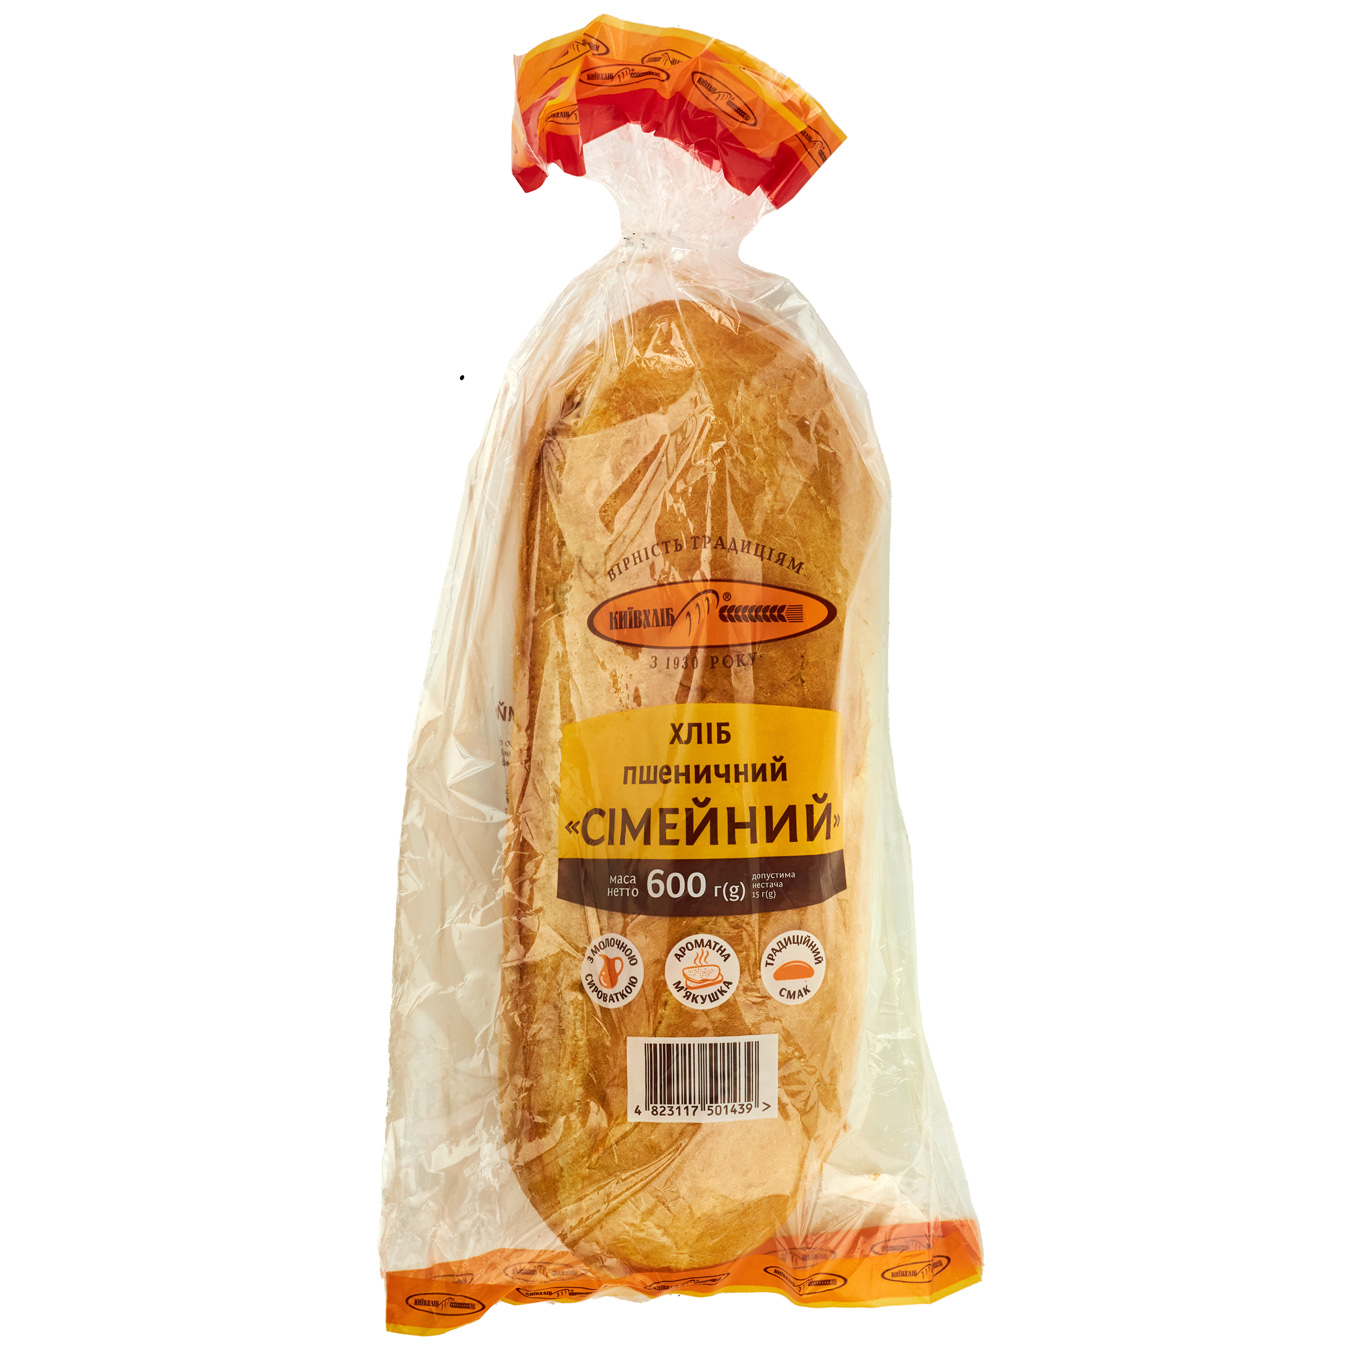 Kievkhlib Simeyny Wheat bread 0,6kg